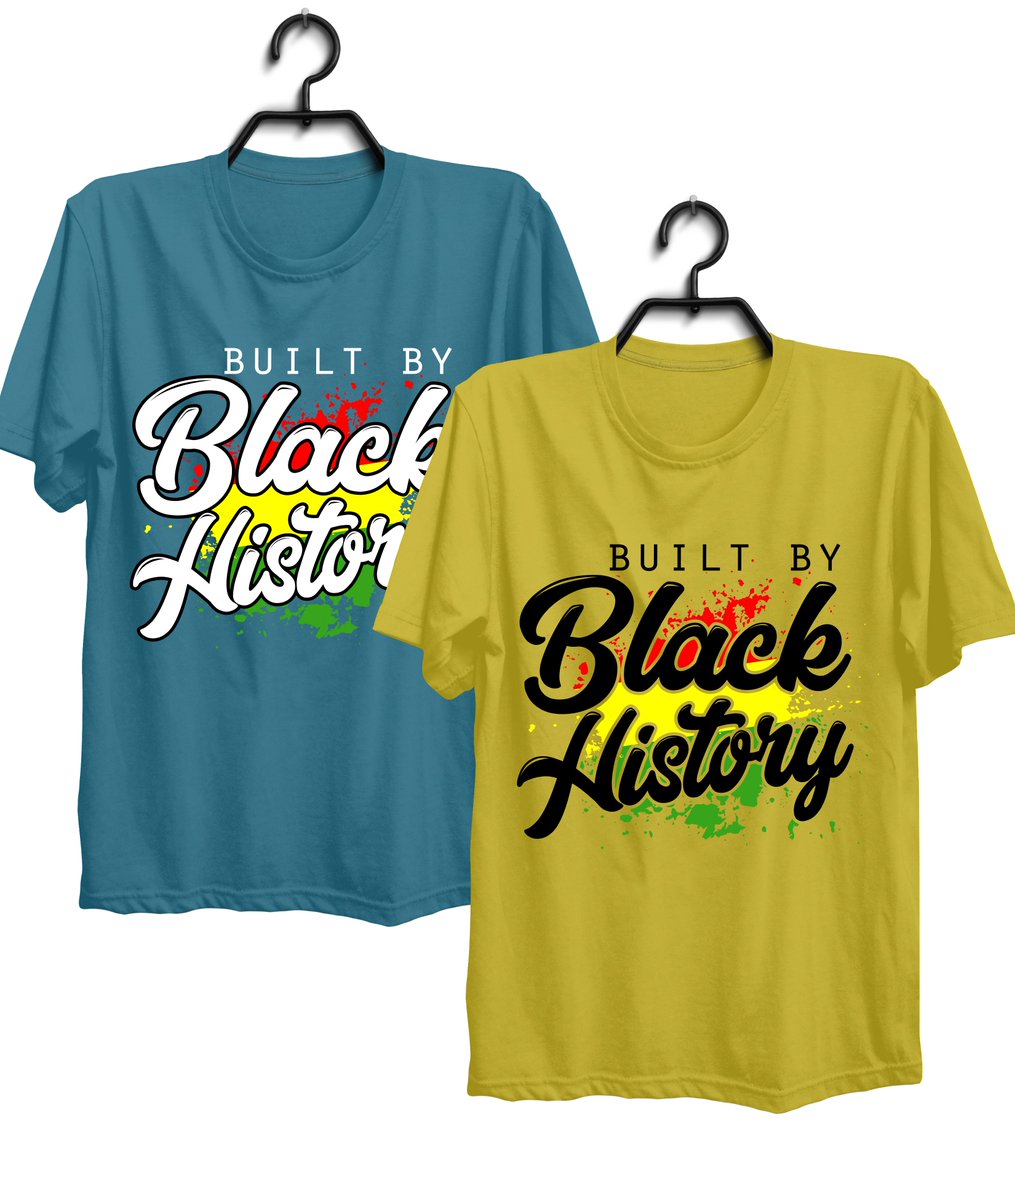 Order for Custom T-shirt Design
Fiverr: fiverr.com/users/merchama…
___
#blackhistorymonth #melaninrich #unapologeticallyafrican #blackhistoryfacts #blackculture #blacklovedoc #blackness #blackmothers #melaninonfleek #blacklegacy #BlackFAMILY #top
#GRAMMYs, #JackHarlow, #Lizzo